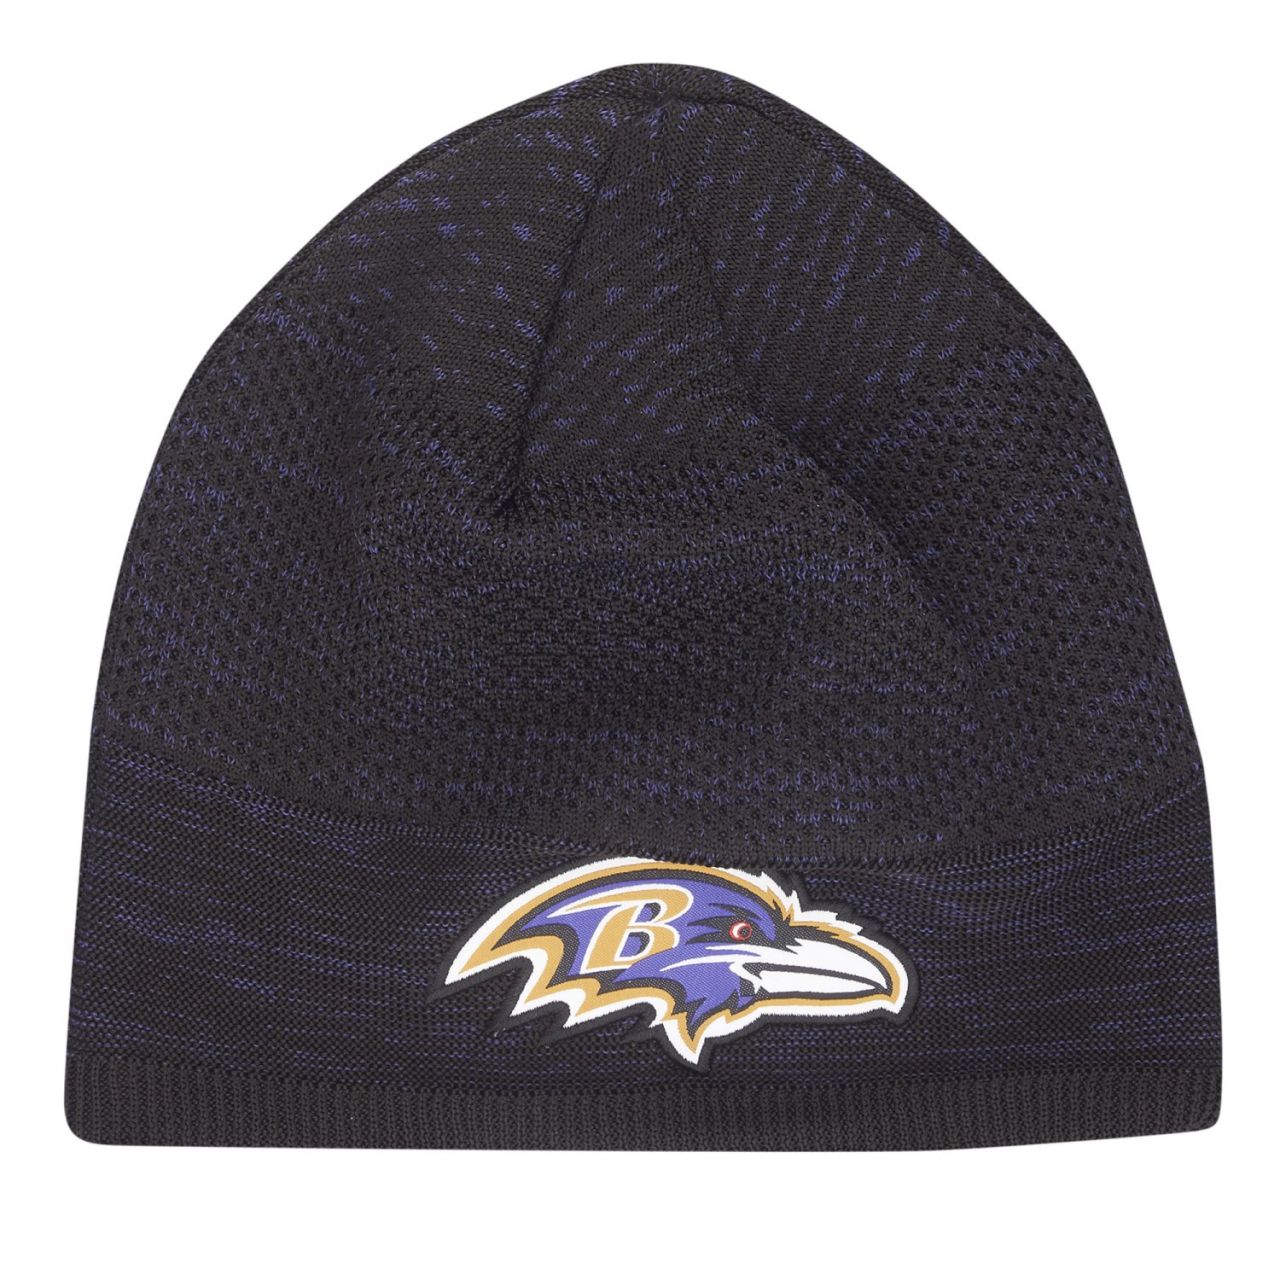 amfoo - New Era TECH KNIT Wintermütze NFL Beanie - Baltimore Ravens